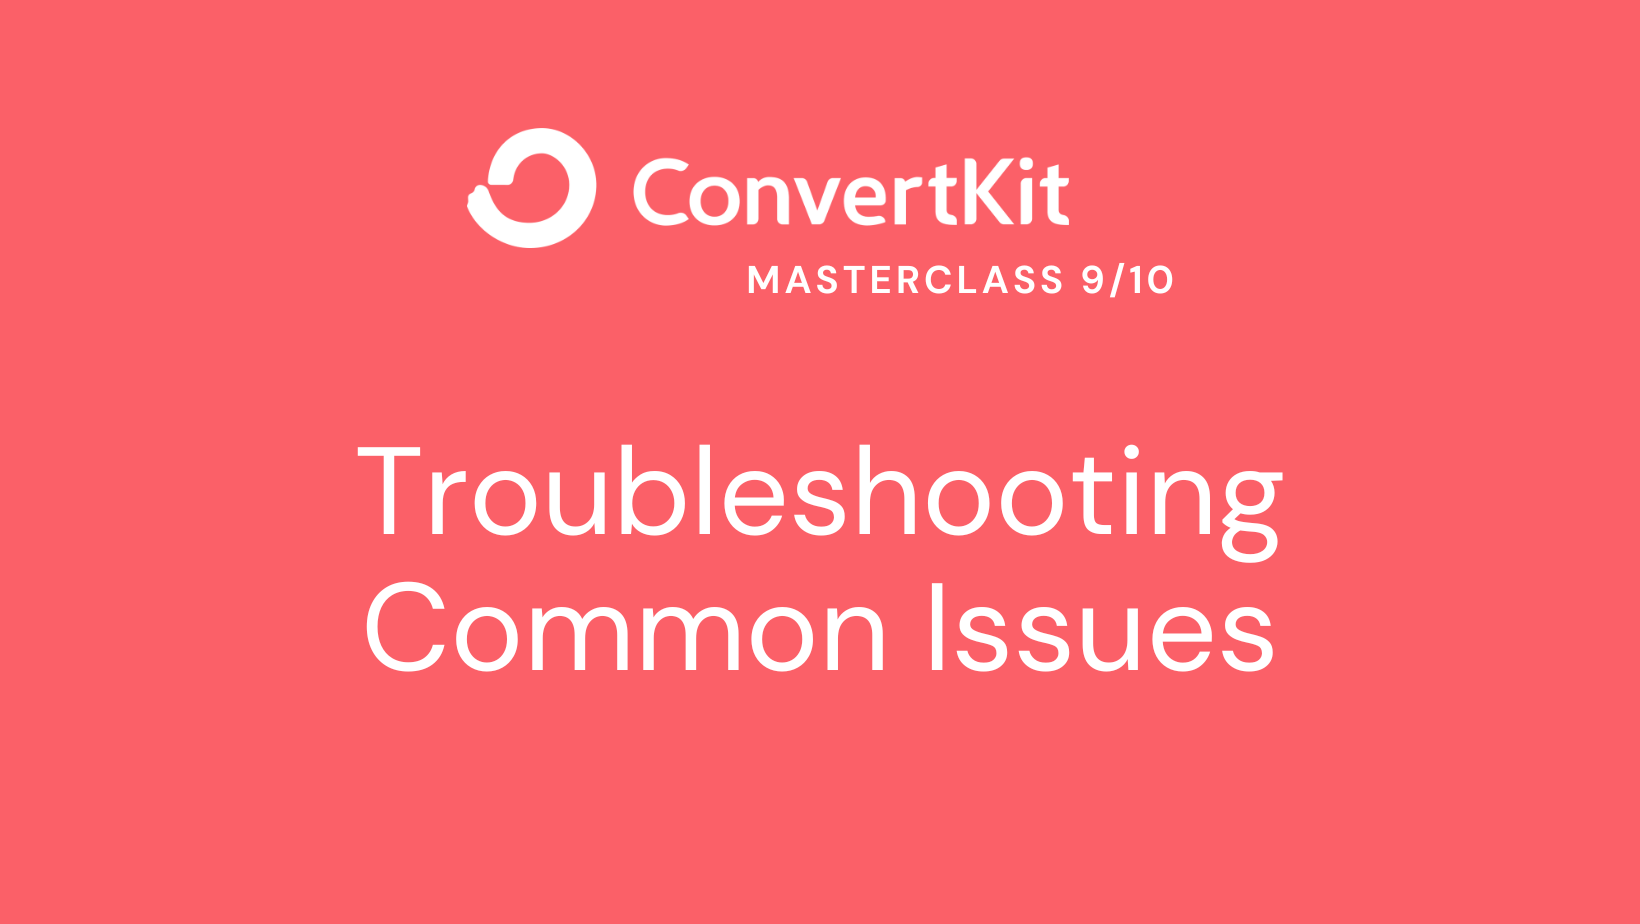 ConvertKit Masterclass 9/10 Troubleshooting Common Issues